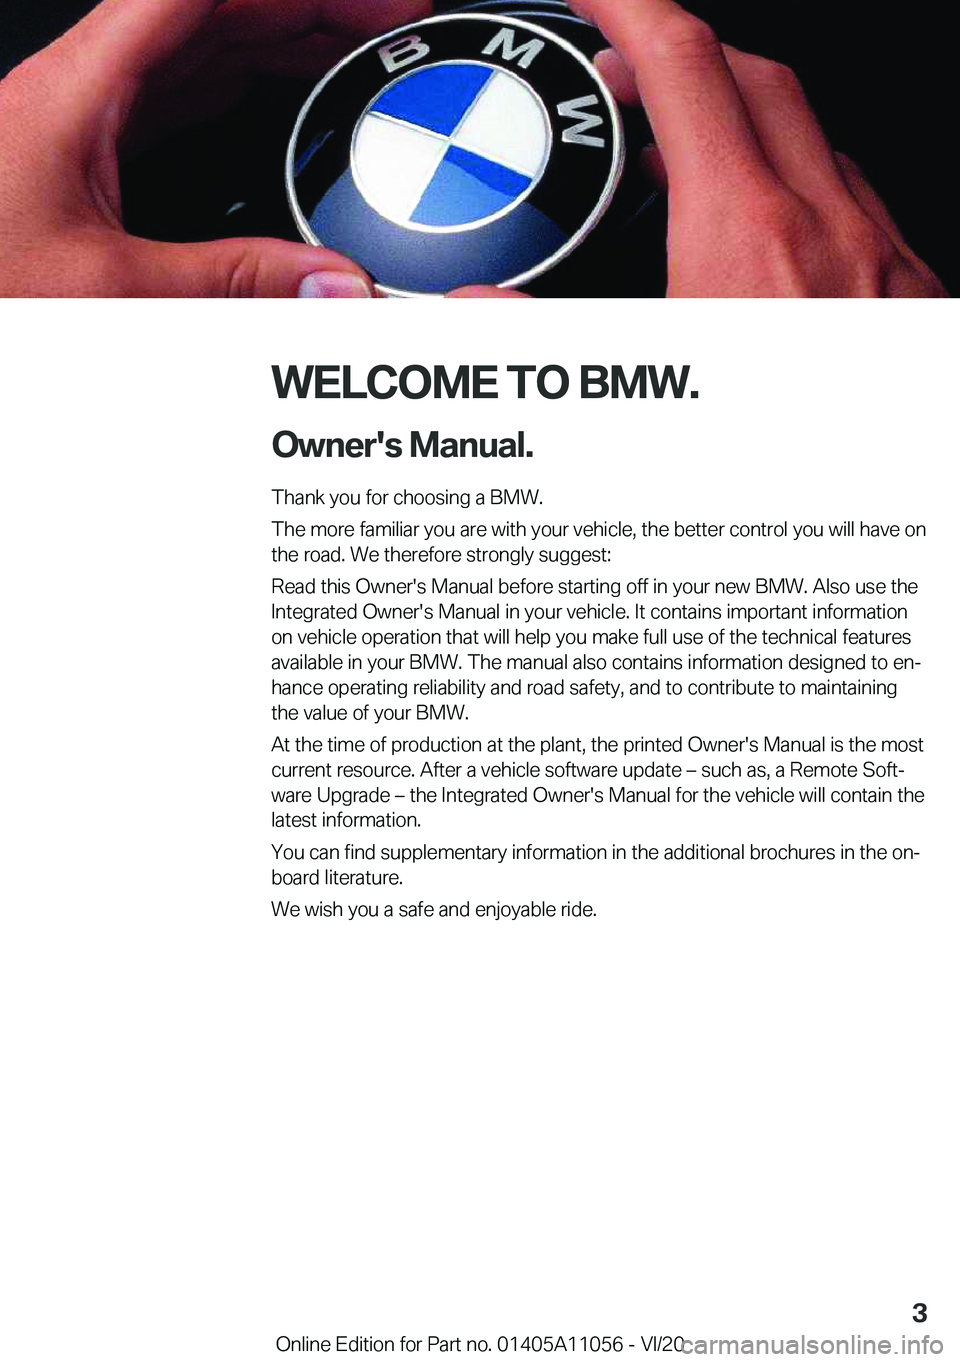 BMW X7 2021  Owners Manual �W�E�L�C�O�M�E��T�O��B�M�W�.�O�w�n�e�r�'�s��M�a�n�u�a�l�.
�T�h�a�n�k��y�o�u��f�o�r��c�h�o�o�s�i�n�g��a��B�M�W�.
�T�h�e��m�o�r�e��f�a�m�i�l�i�a�r��y�o�u��a�r�e��w�i�t�h��y�o�u�r��v�e